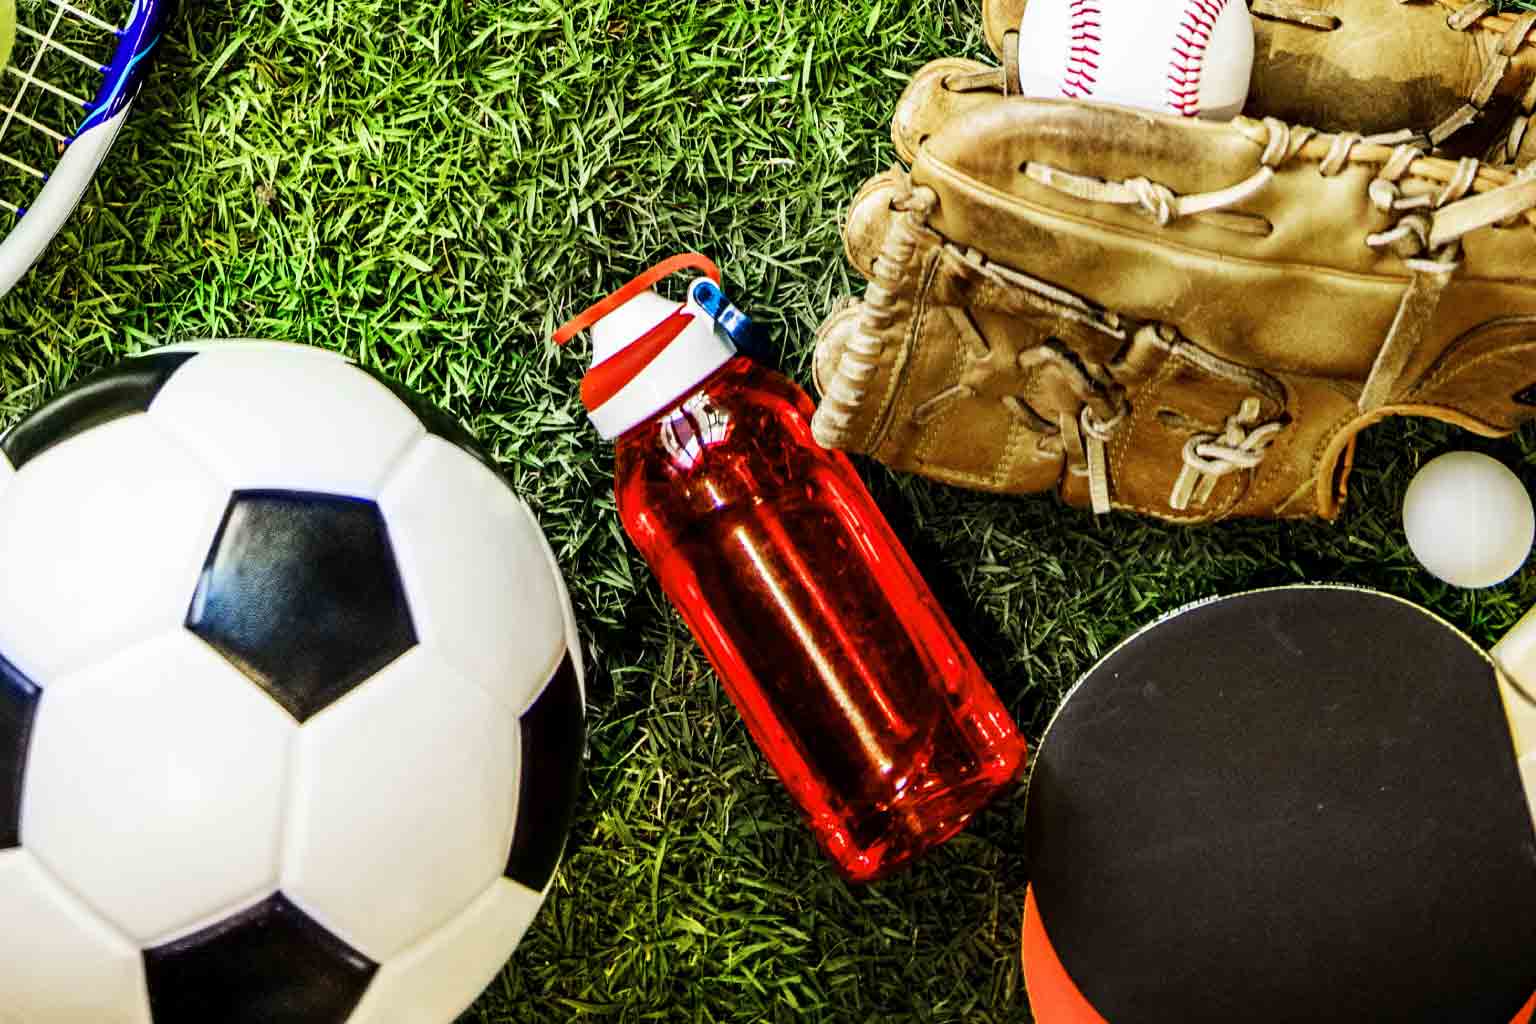 bolas, garrafa d'a´gua, raquete e luvas de beisebol, artigos esportivas representando o dia do esporte